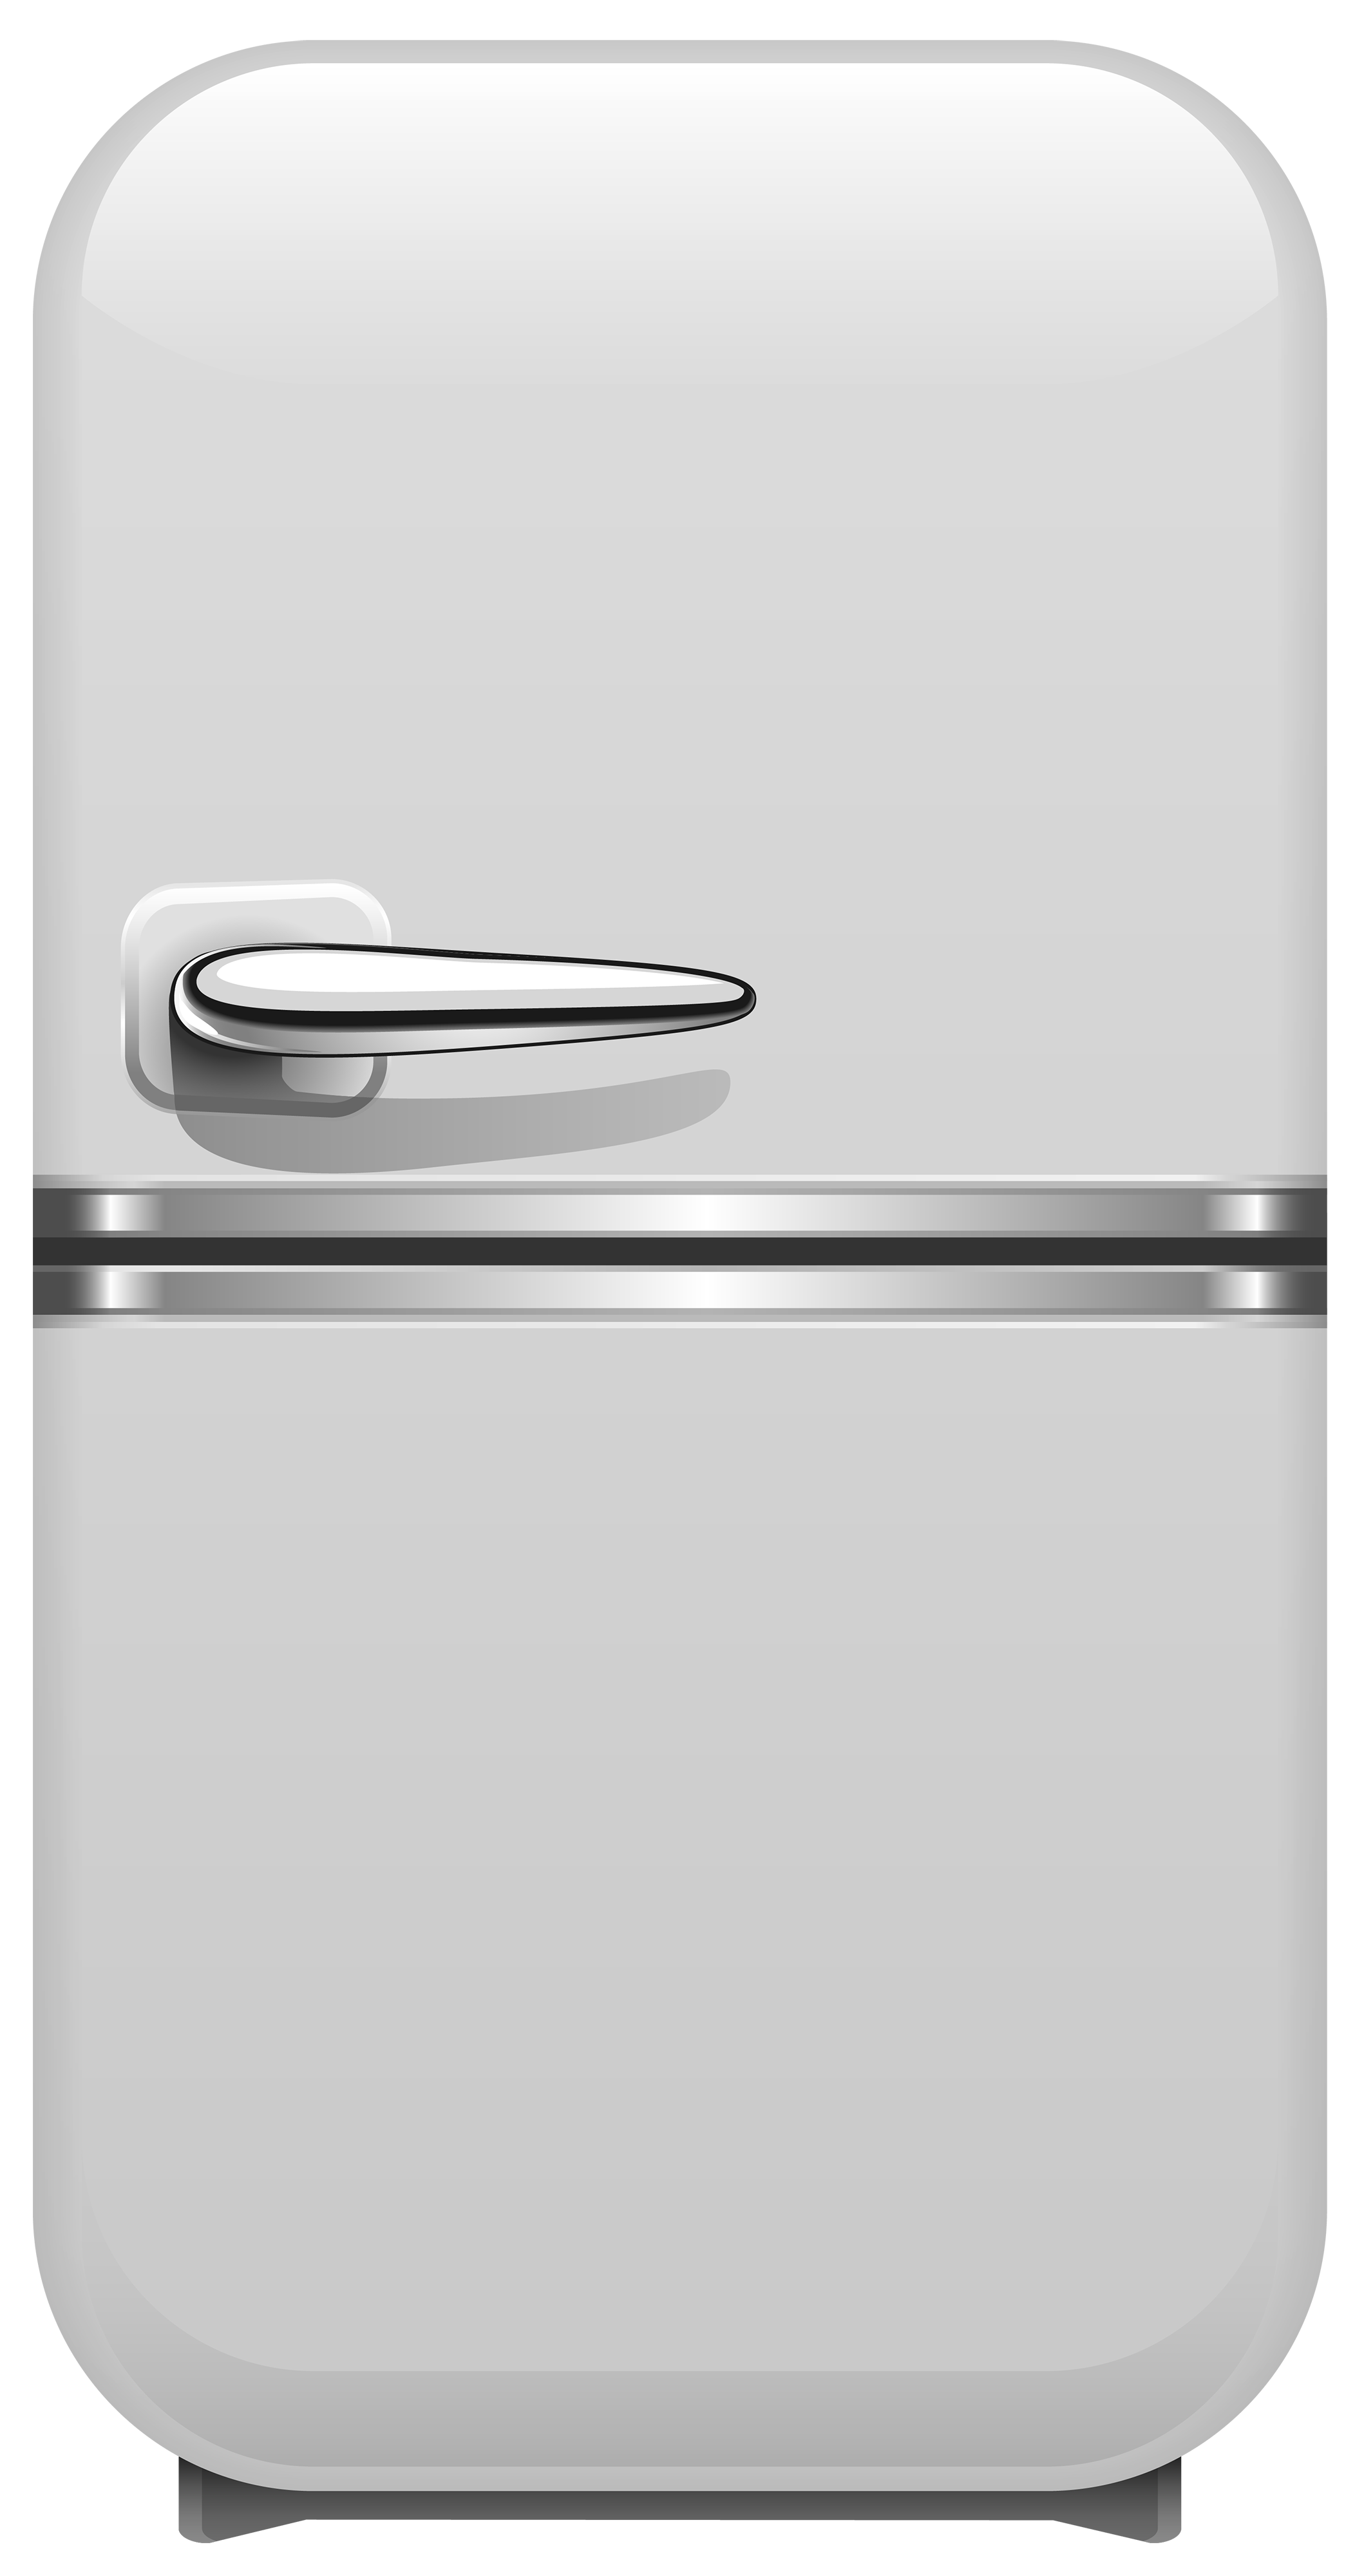 fridge clipart